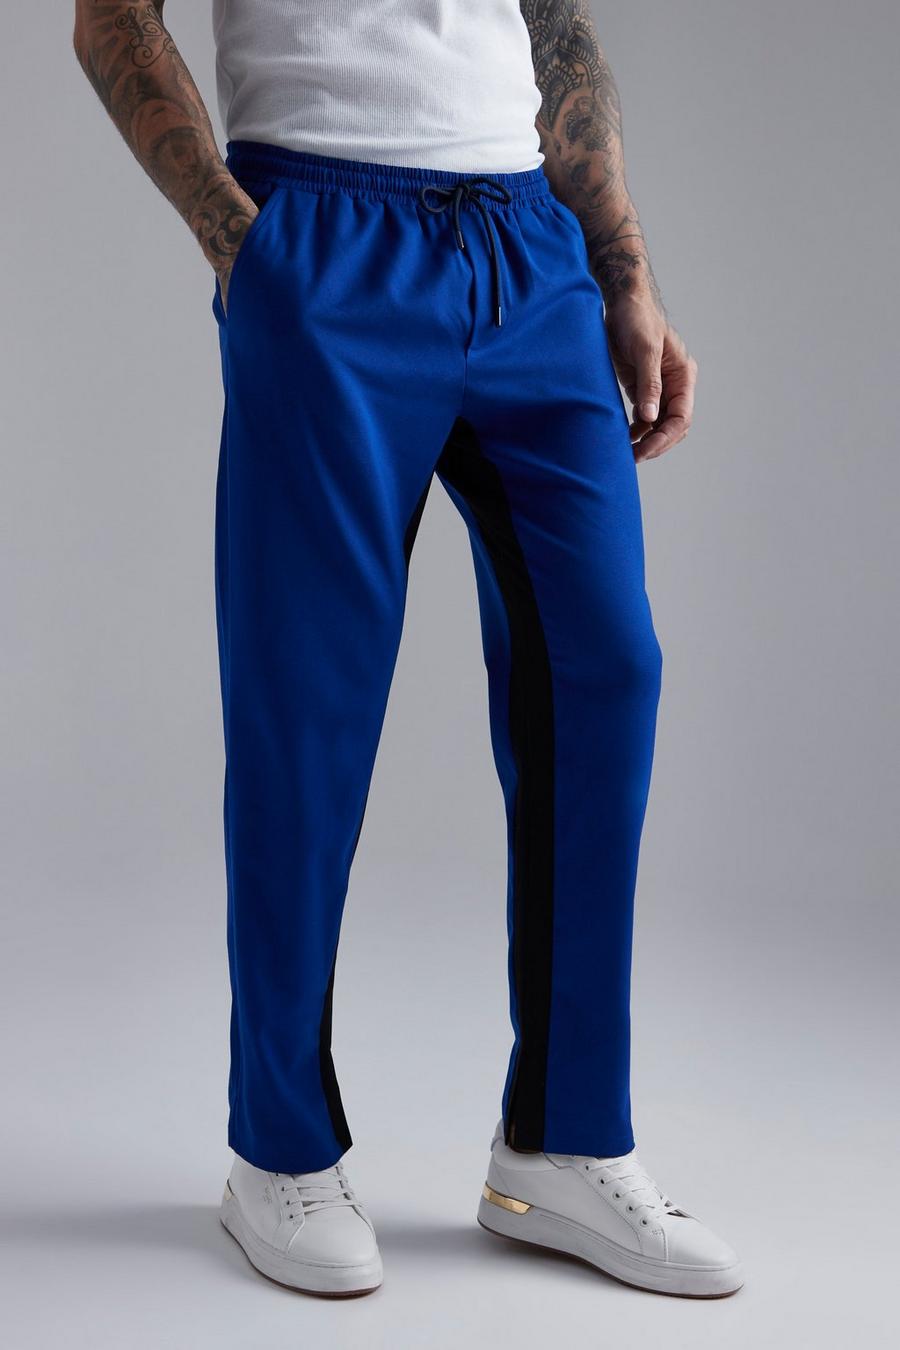 Pantaloni tuta dritti con inserti, Cobalt azul image number 1